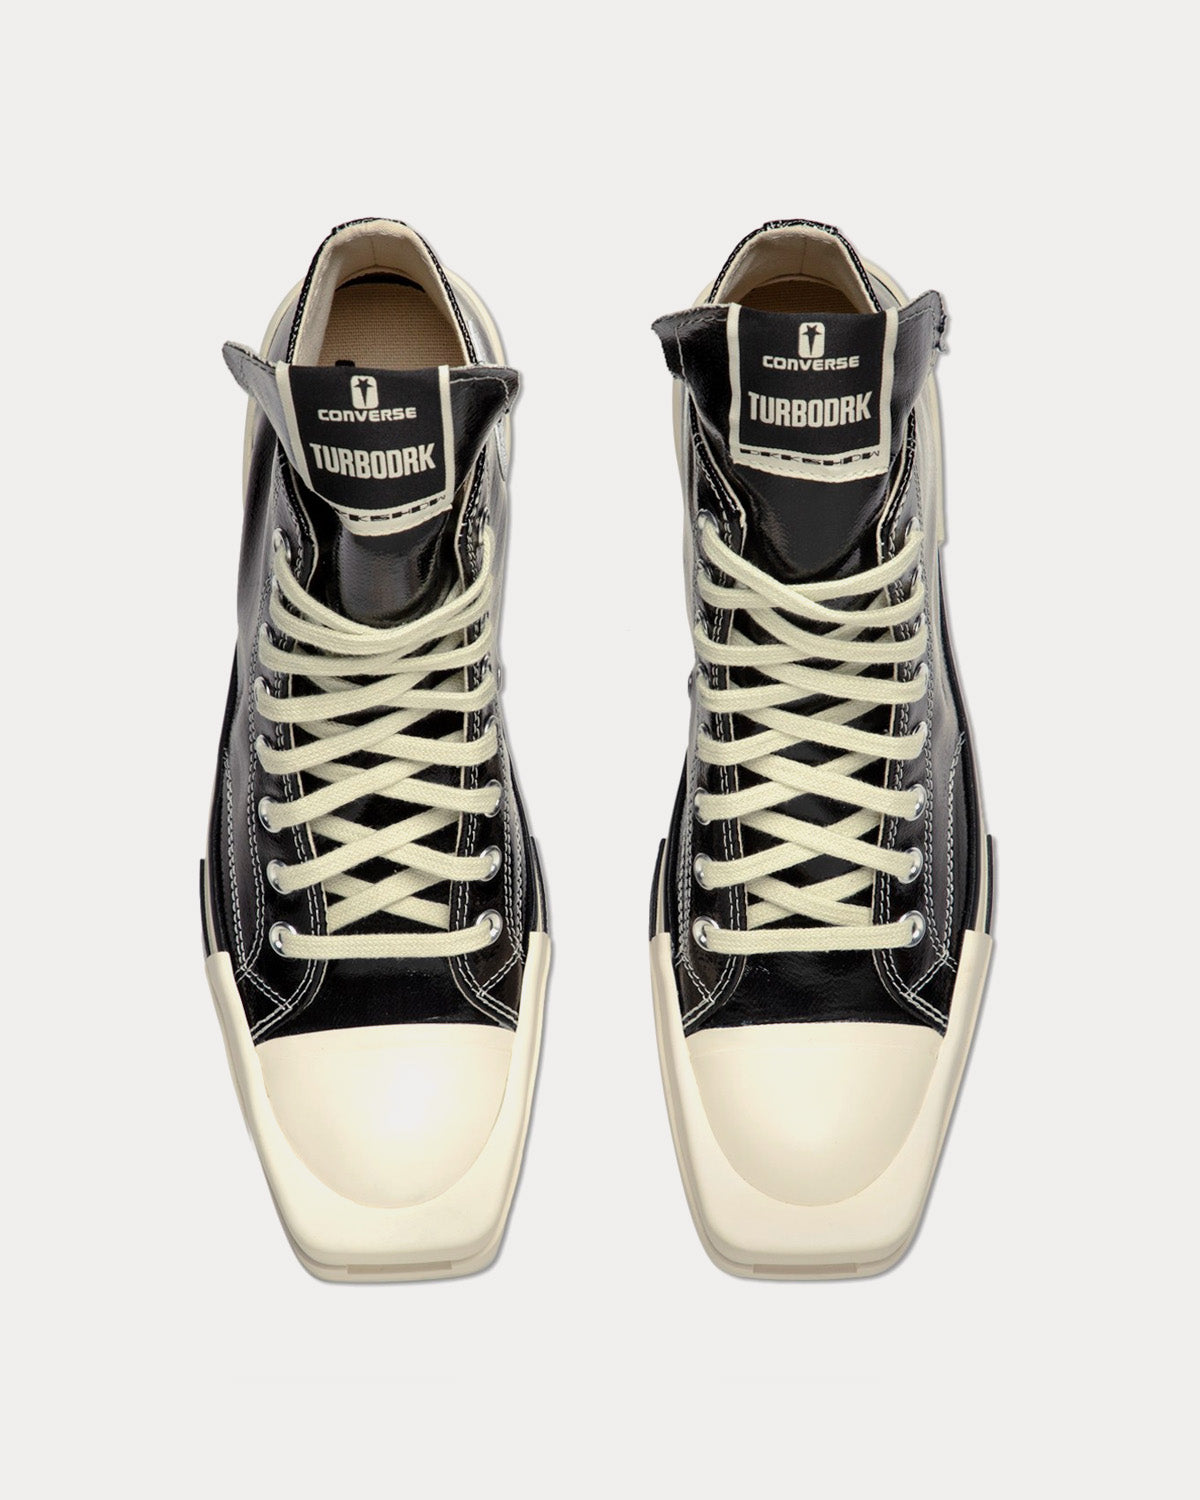 Converse x Rick Owens DRKSHDW - Chuck 70 Black / Egret / Bone White High Top Sneakers